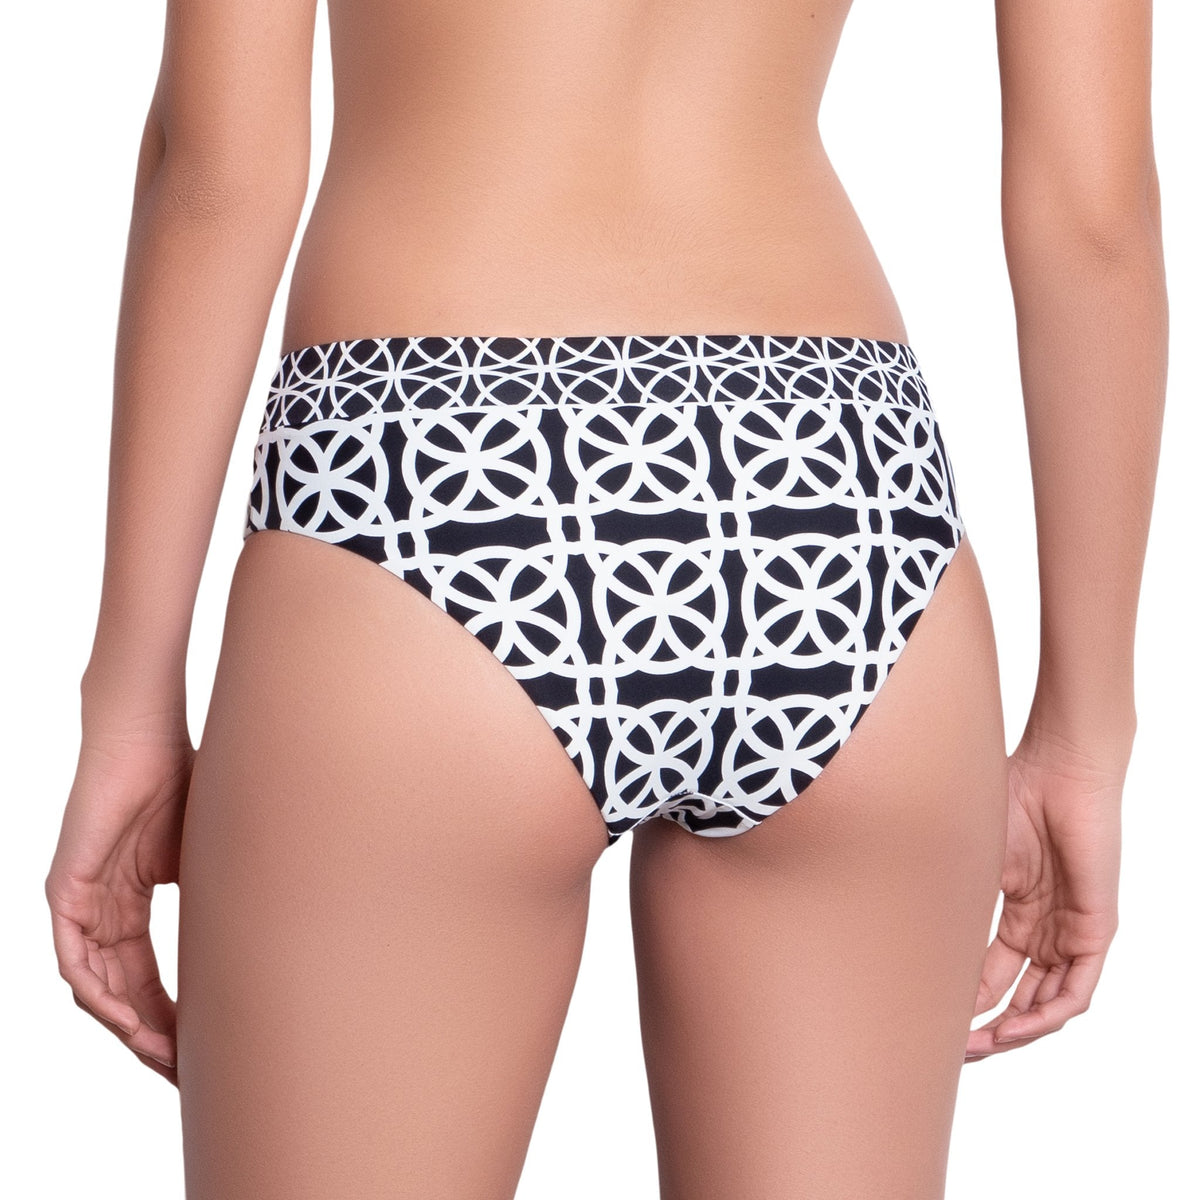 BRIGITTE medium rise panty, printed bikini bottom by ALMA swimwear ‚Äì back view 